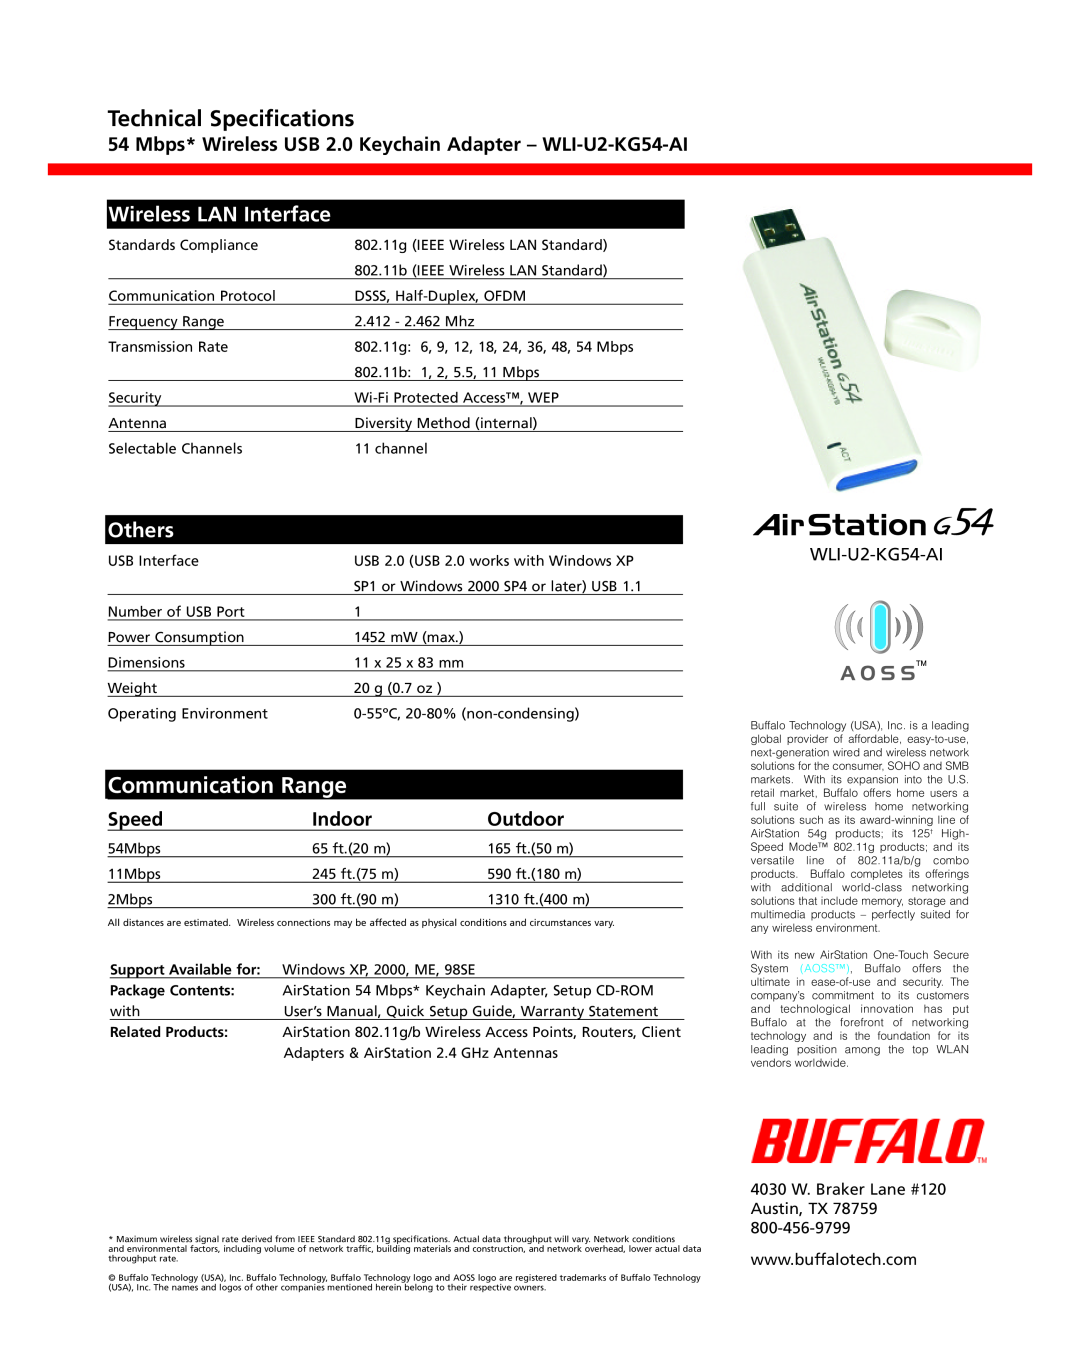 Buffalo Technology WLI-U2-KG54-AI Speed, Indoor, Outdoor, 4030 W. Braker Lane #120 Austin, TX 78759, Communication Range 